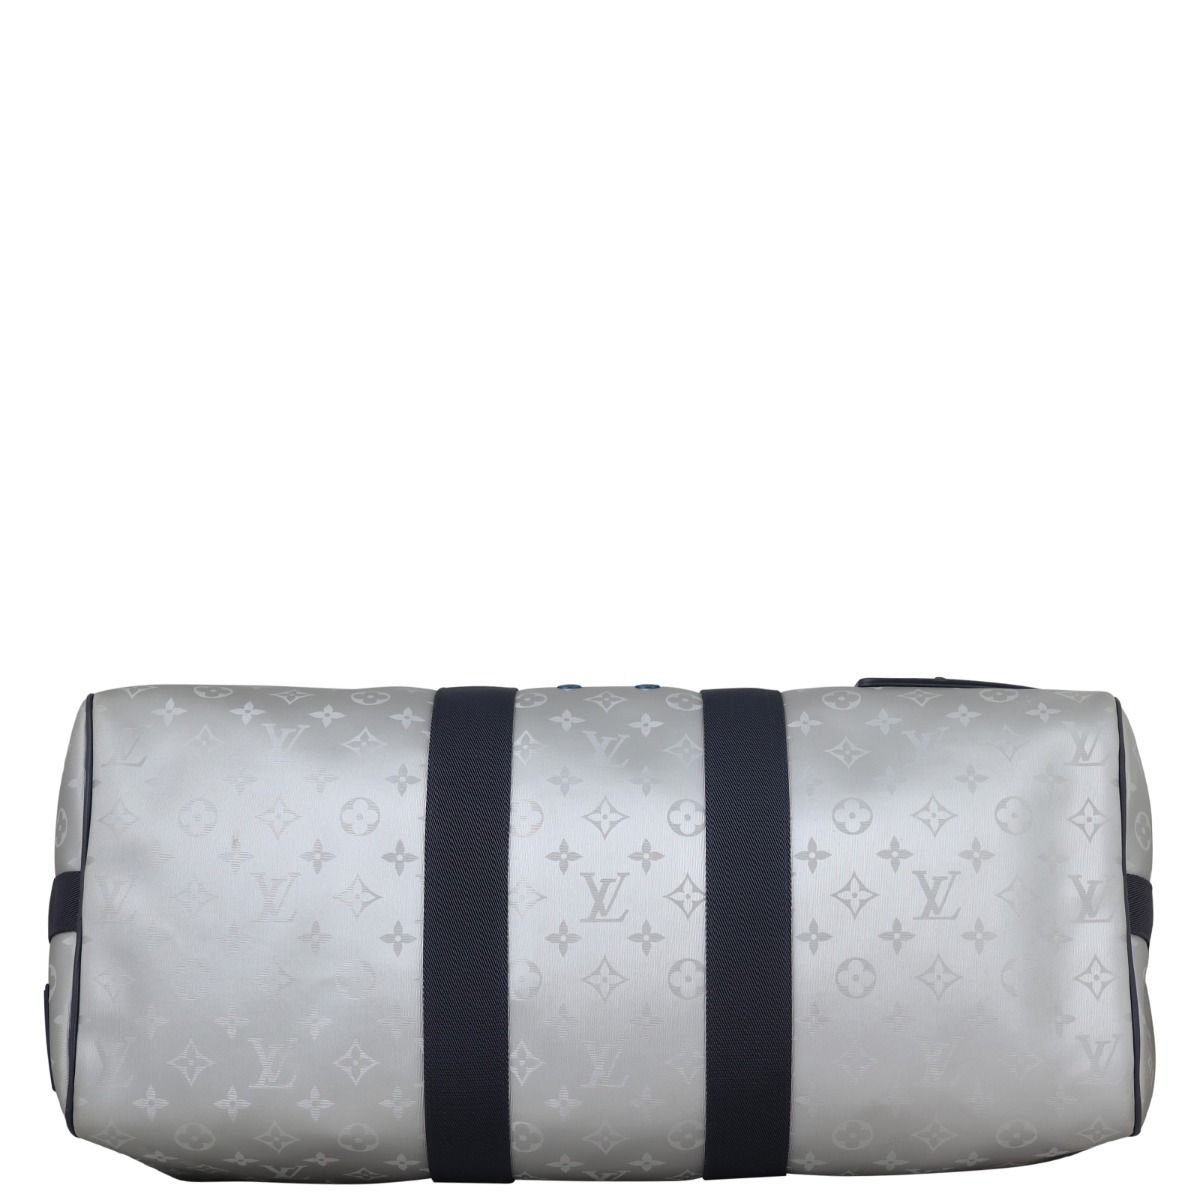 Louis Vuitton Satellite Keepall Bandouliere 50 Monogram Travel Bag Silver